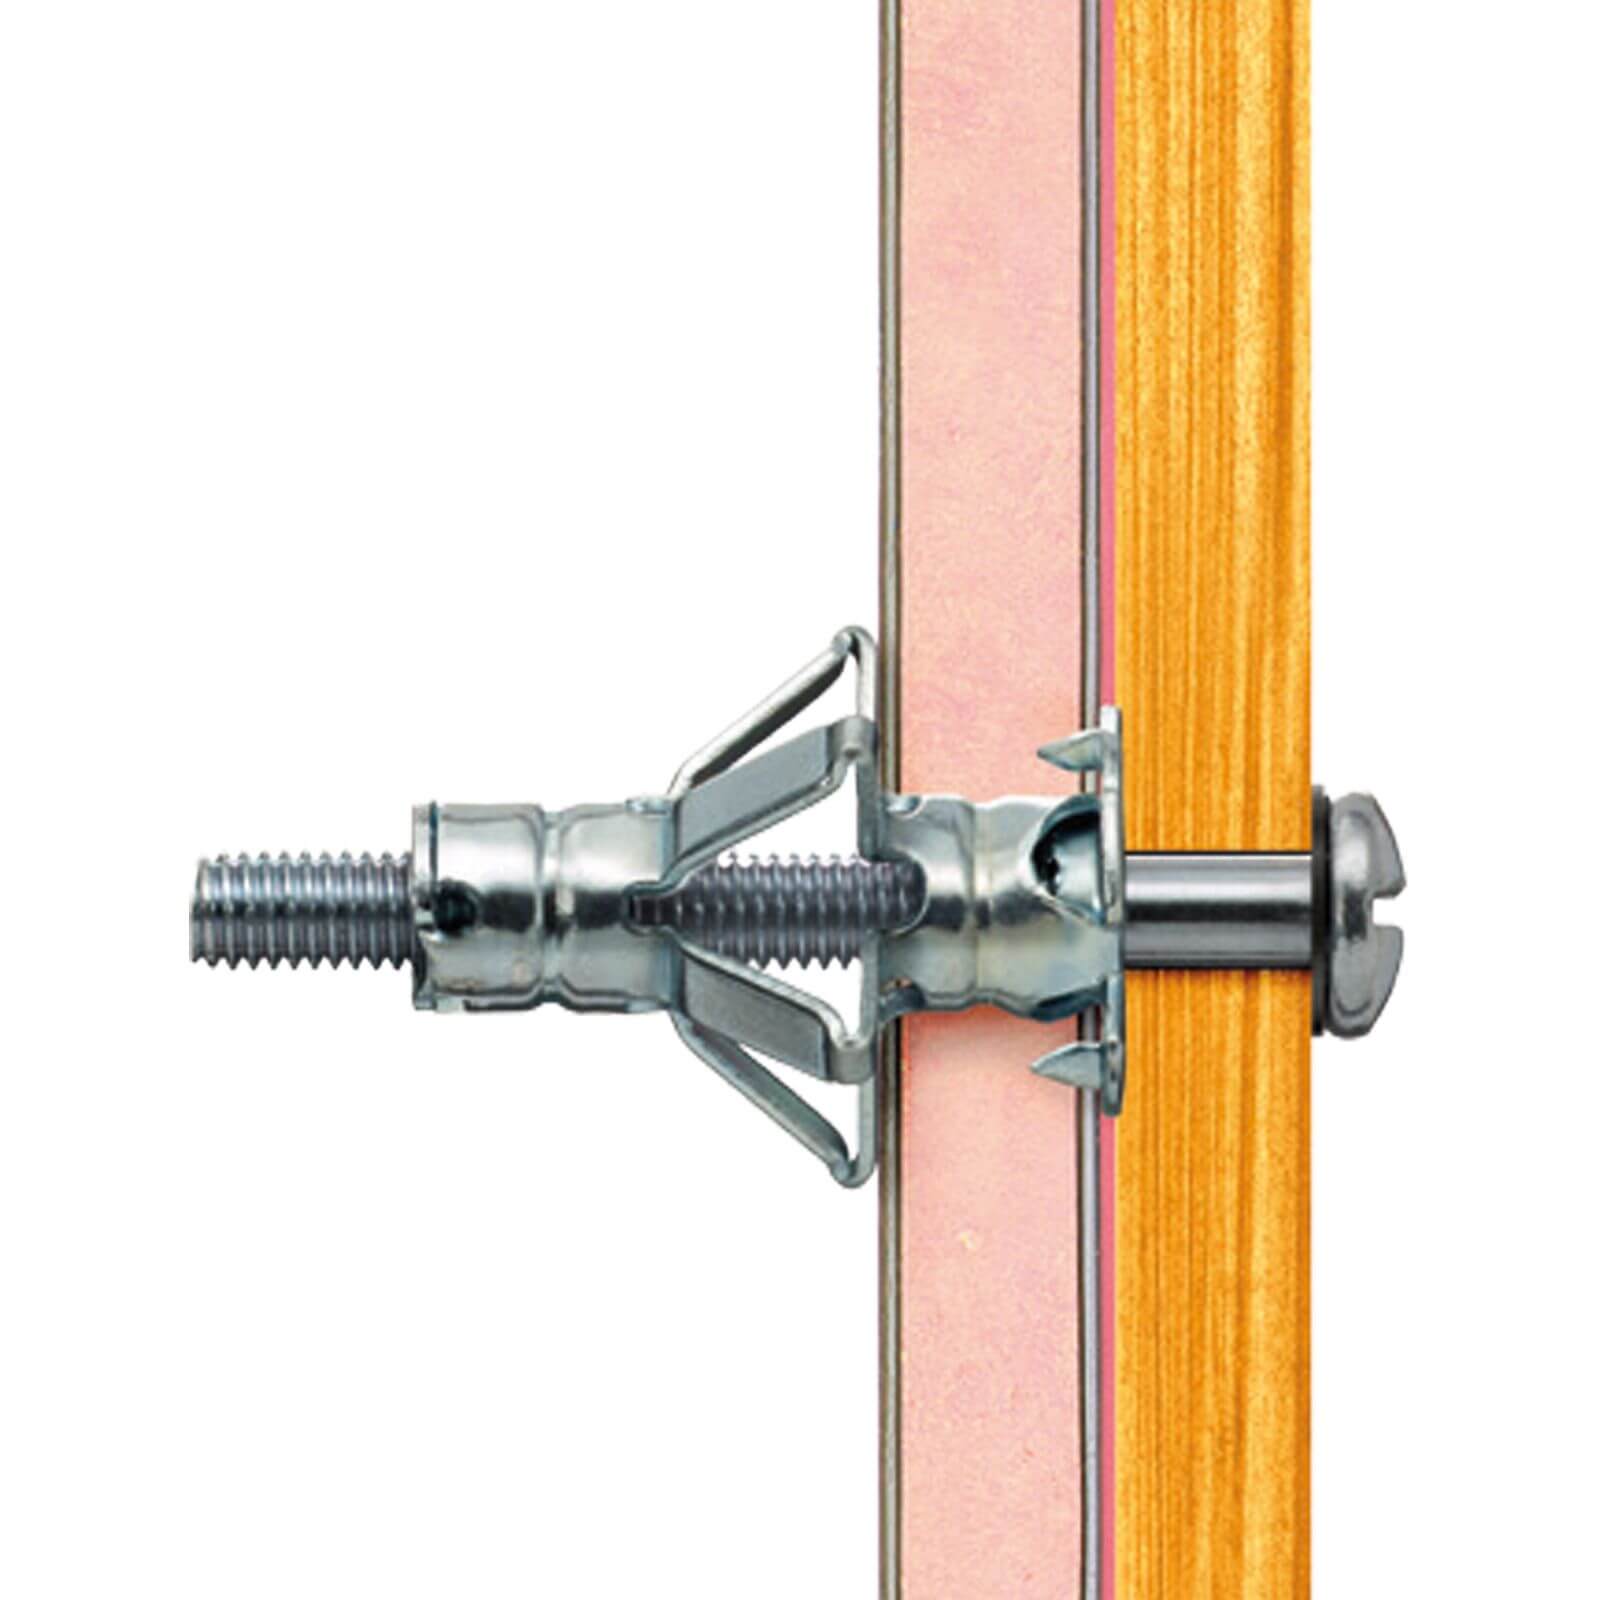 Plasplugs Cavity Anchor M5 x 40 x 5